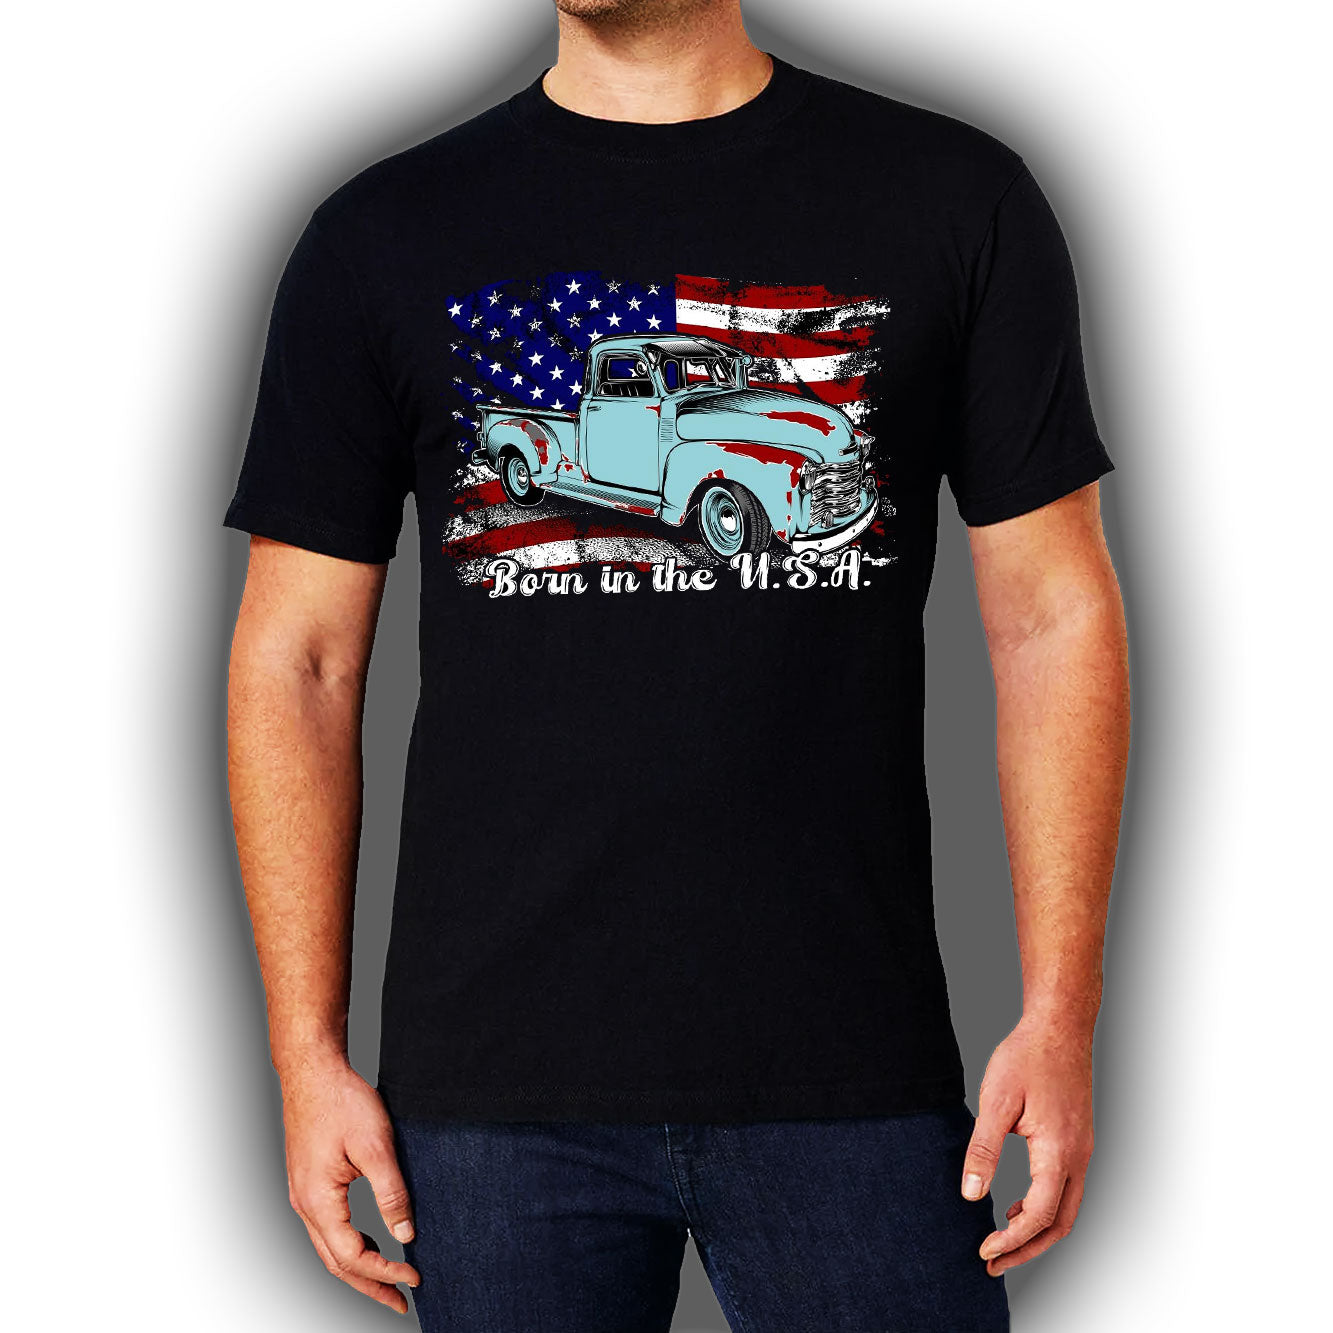 Old Trucks Rule Born in the USA Shirt